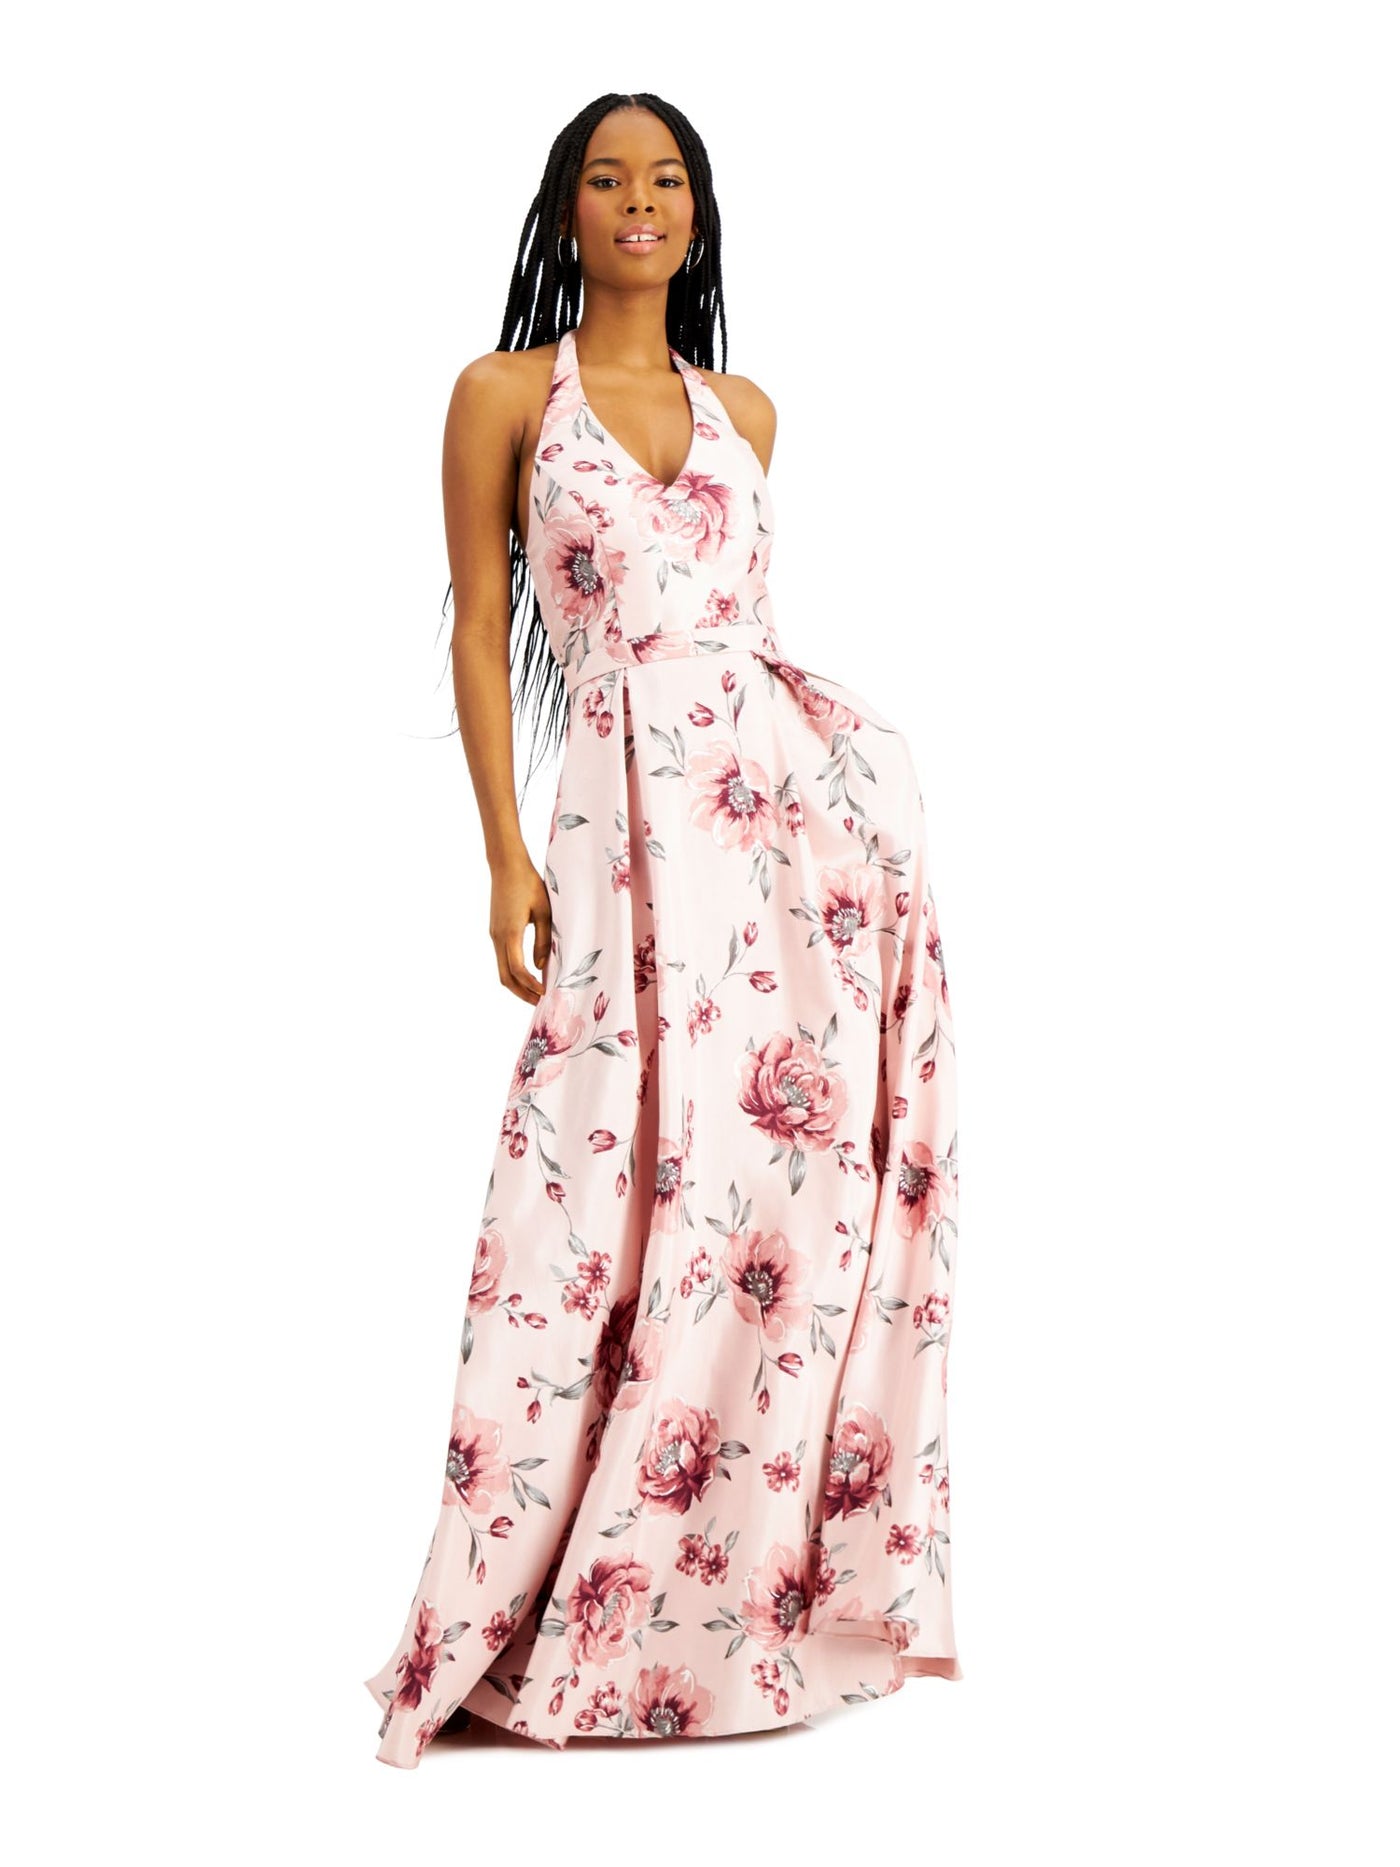 CITY STUDIO Womens Pink Floral Sleeveless Halter Full-Length  Fit + Flare Prom Dress Juniors 7